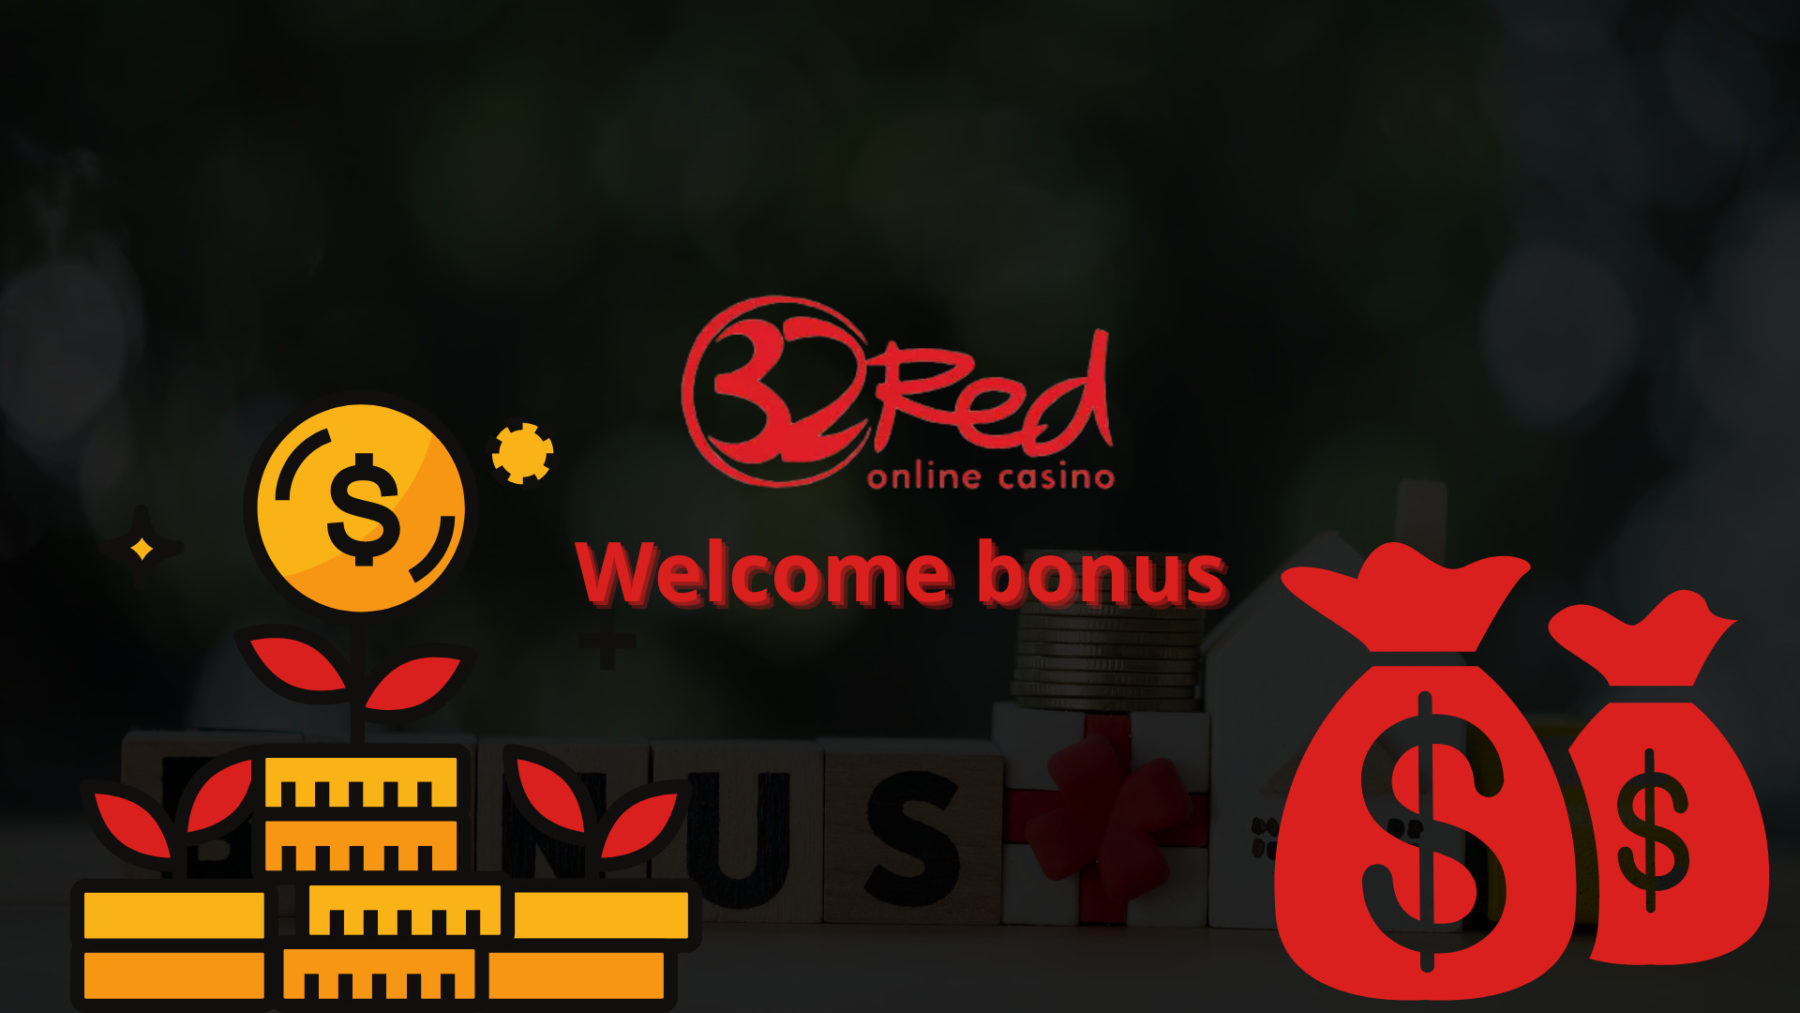 Bonuses & Promotions 2022 - 32red Casino -